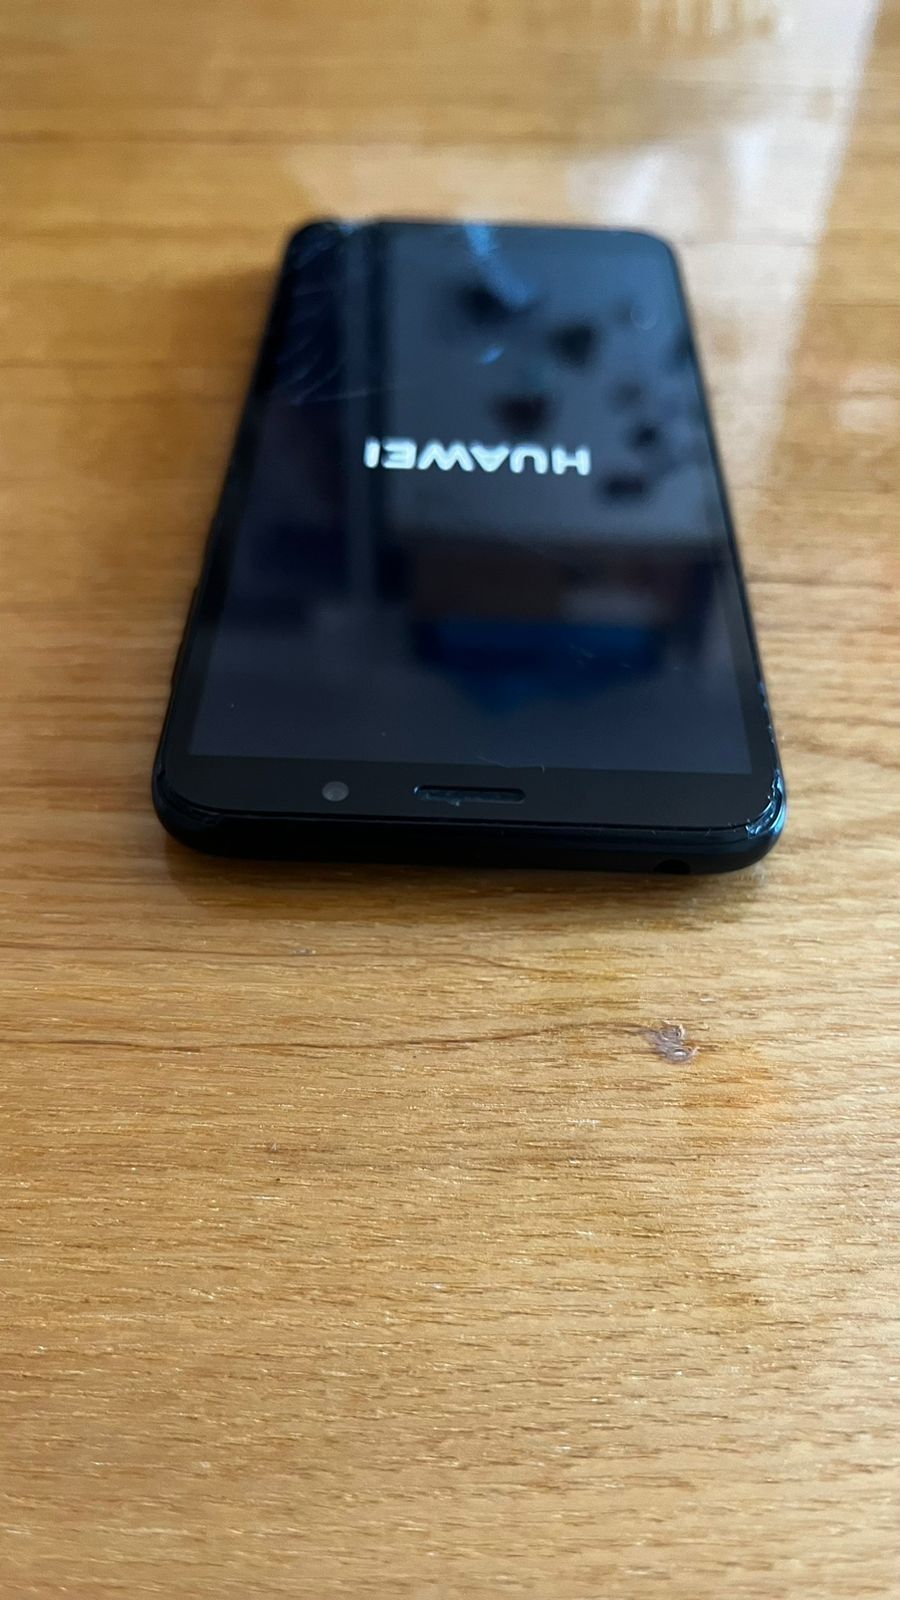 Huawei y5p работает